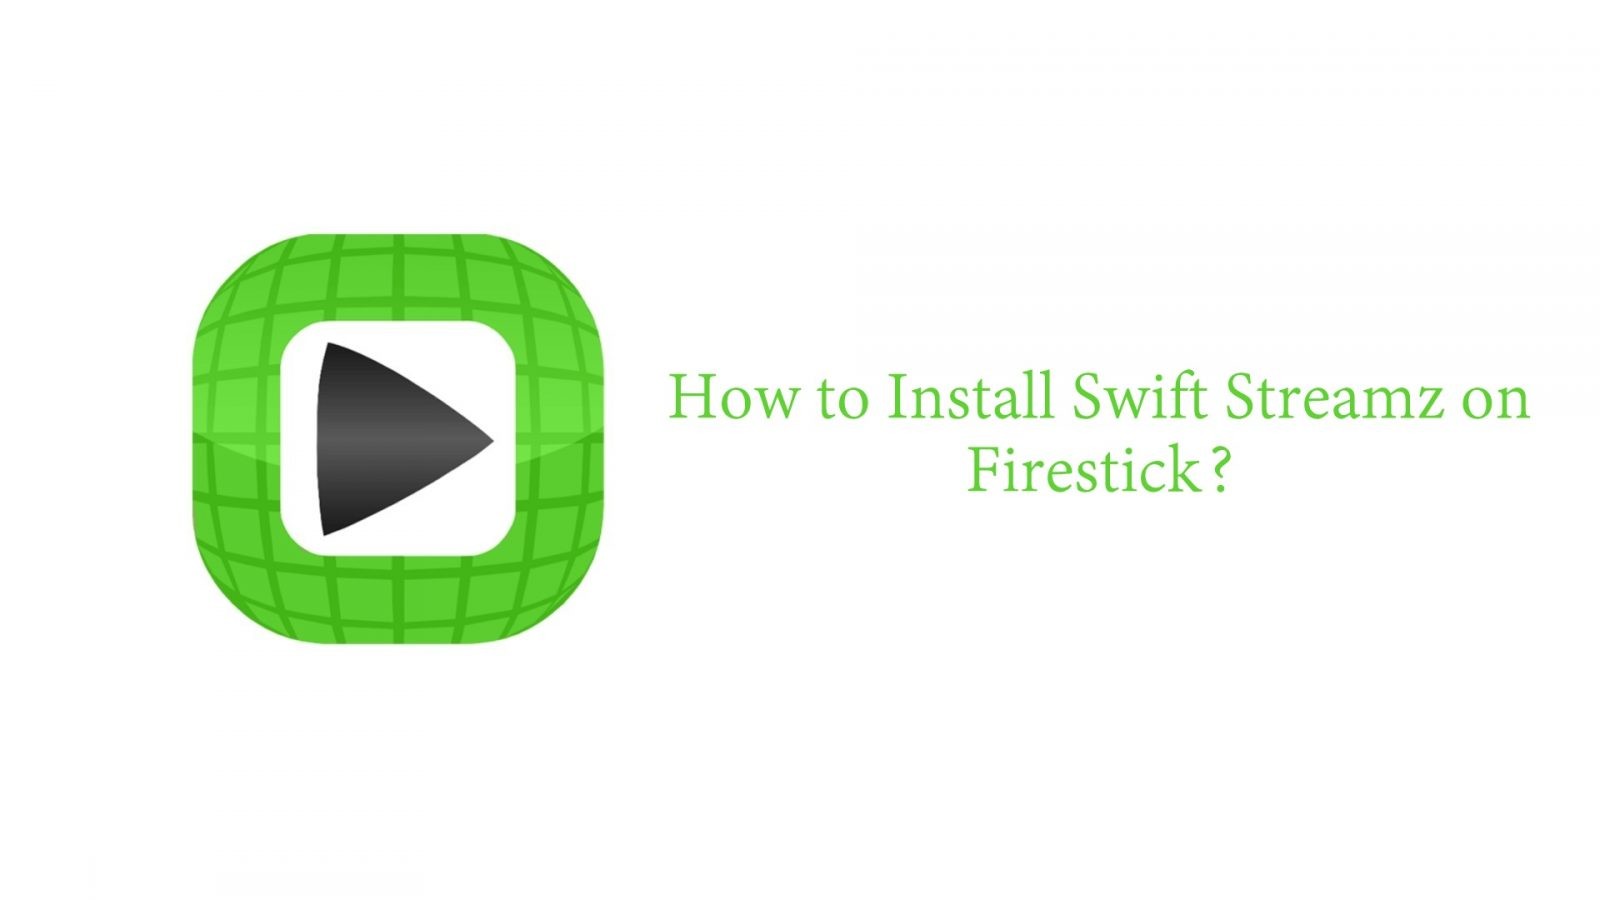 How to install Swift Streamz on Firestick [2021]